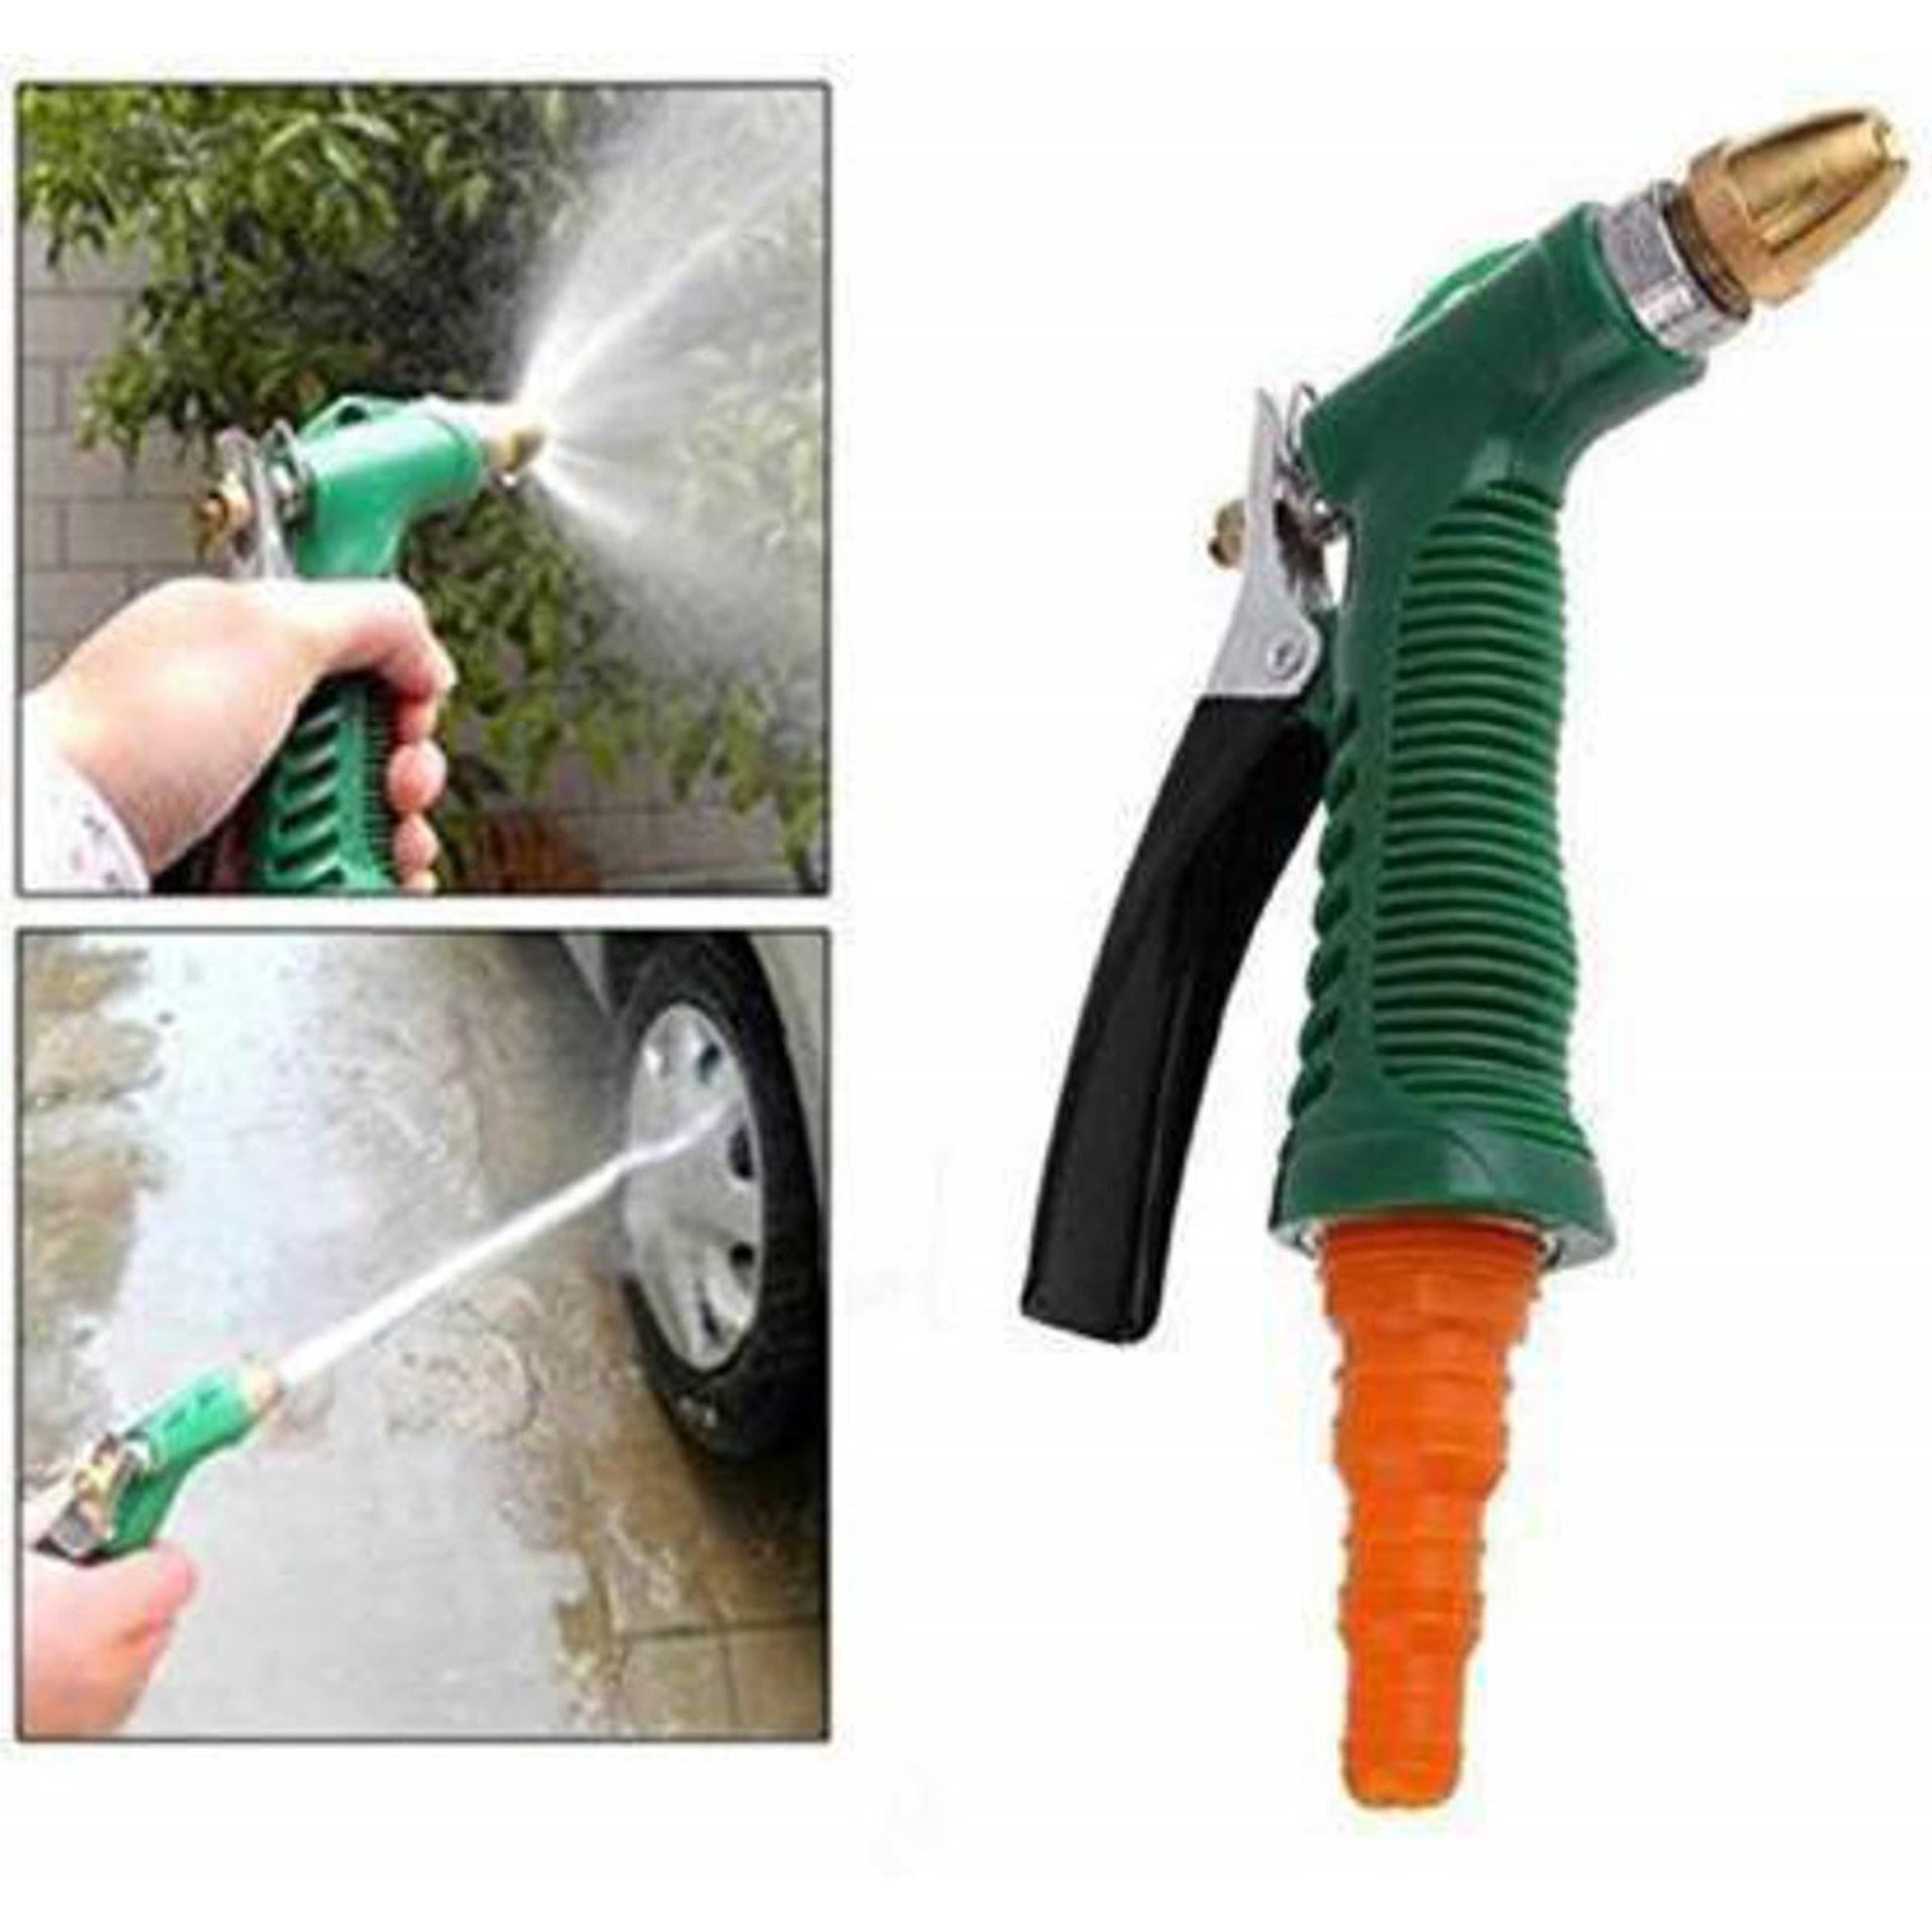 DURABLE HOSE NOZZLE WATER LEVER SPRAY Metal Hose Nozzle High Pressure Water Spray Sprayer Garden Auto Car Washing